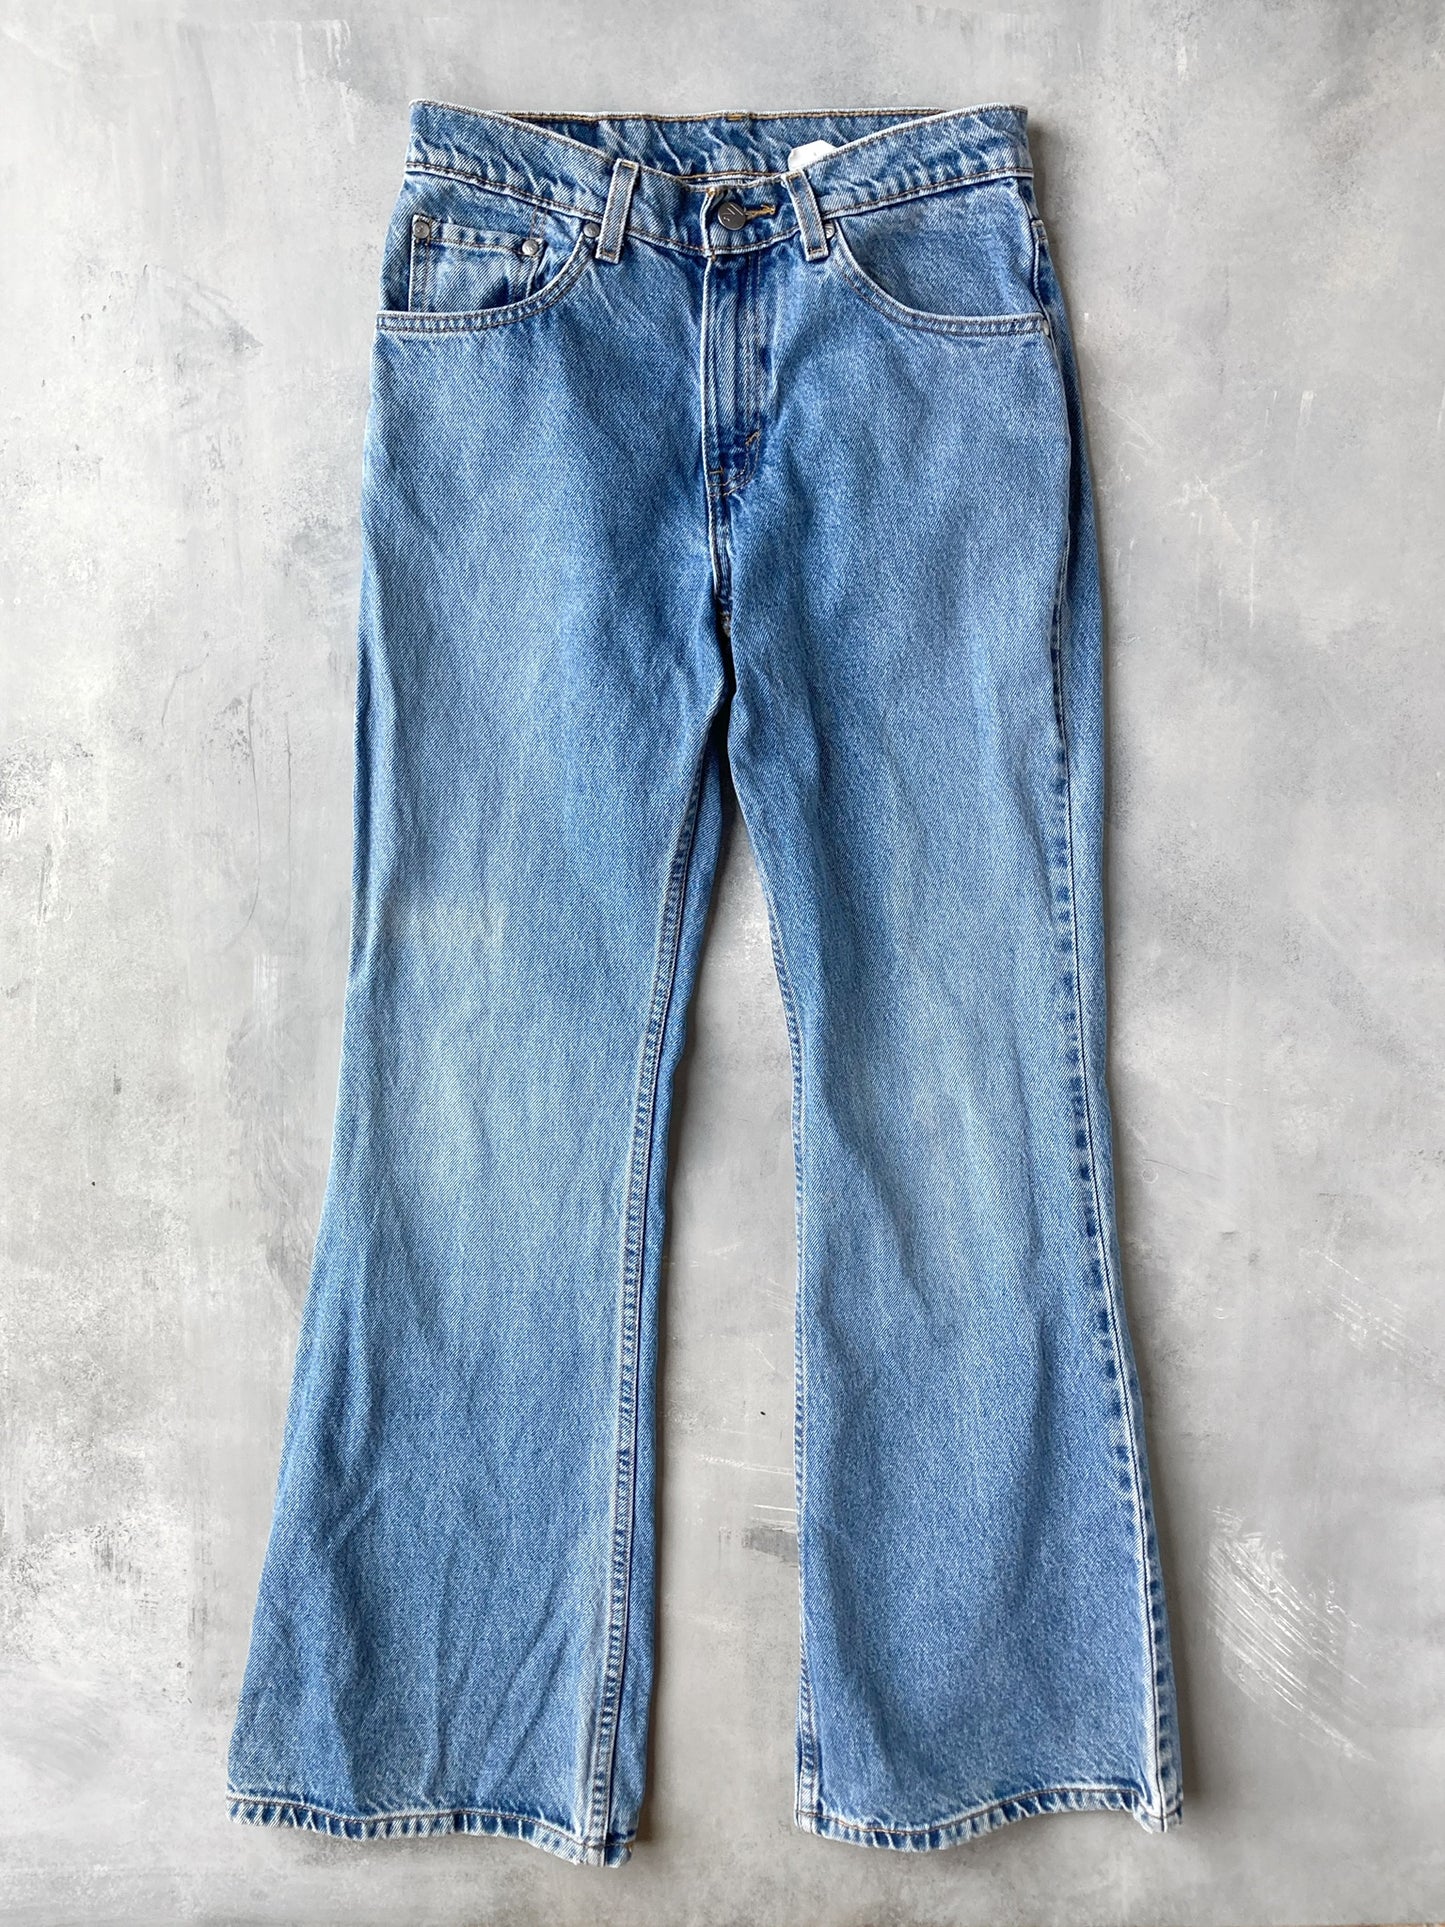 Levi's Silvertab Jeans 90's - 6